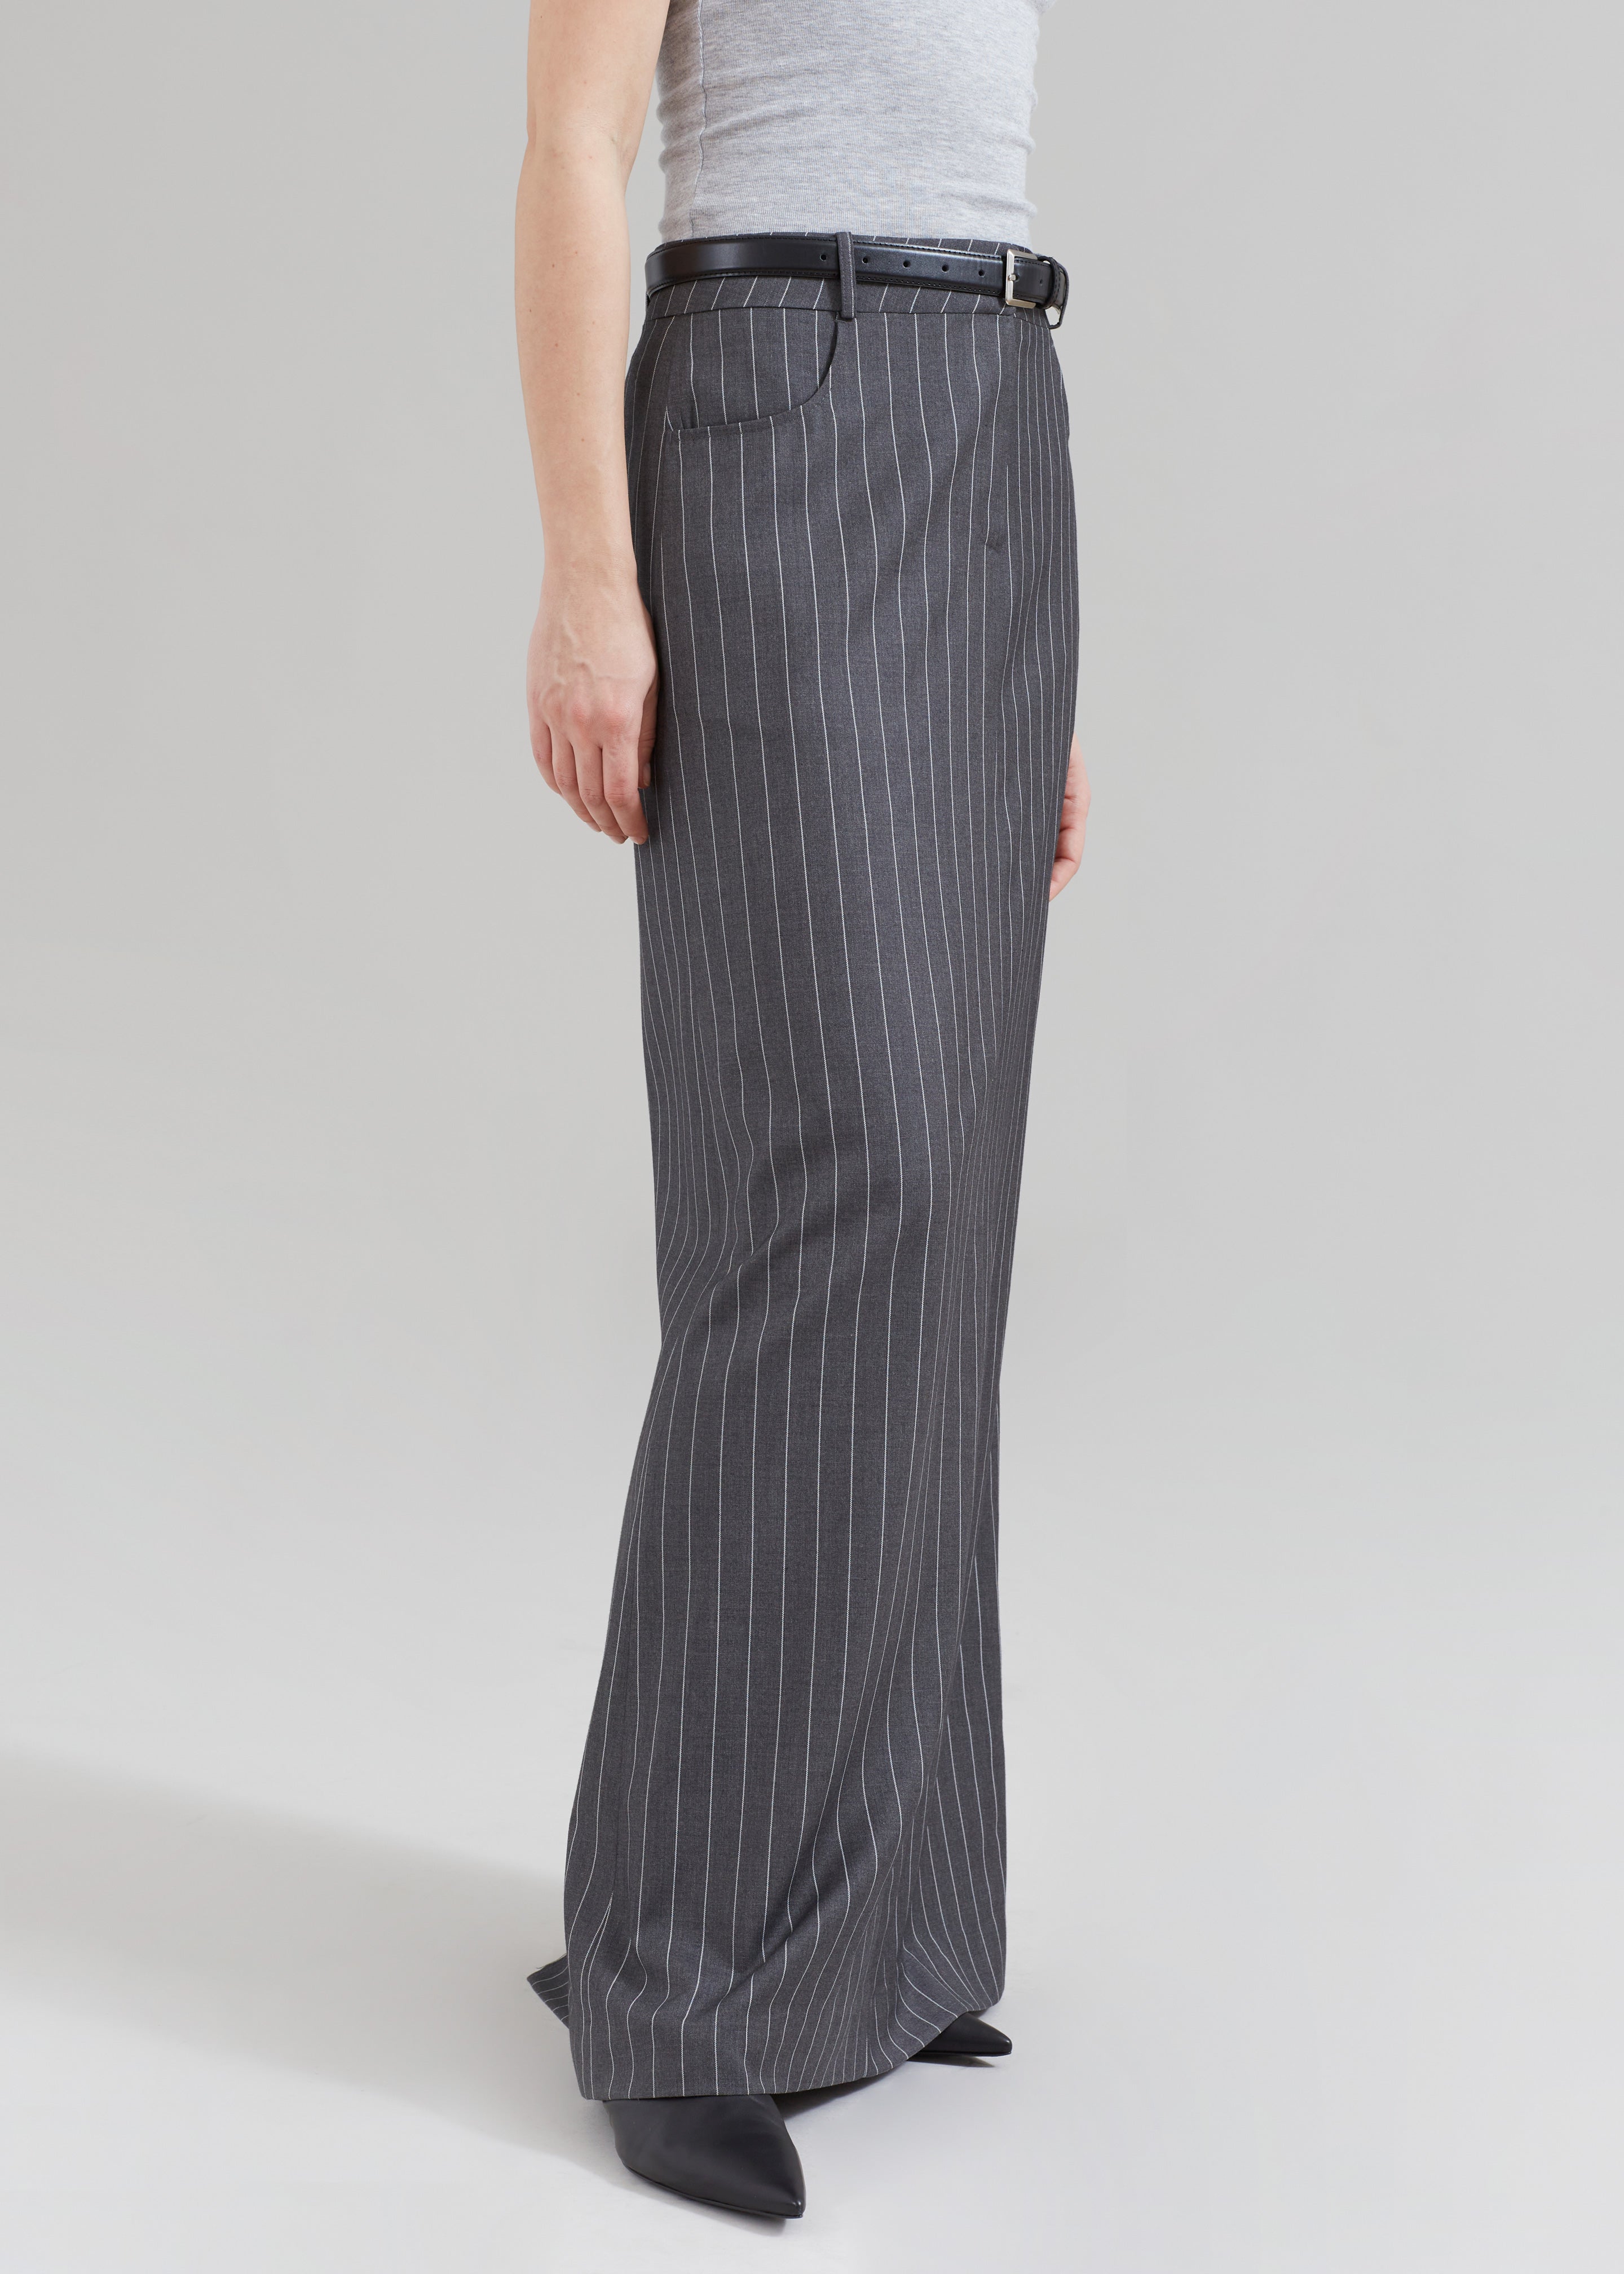 Malvo Long Pencil Skirt - Grey Pinstripe - 5